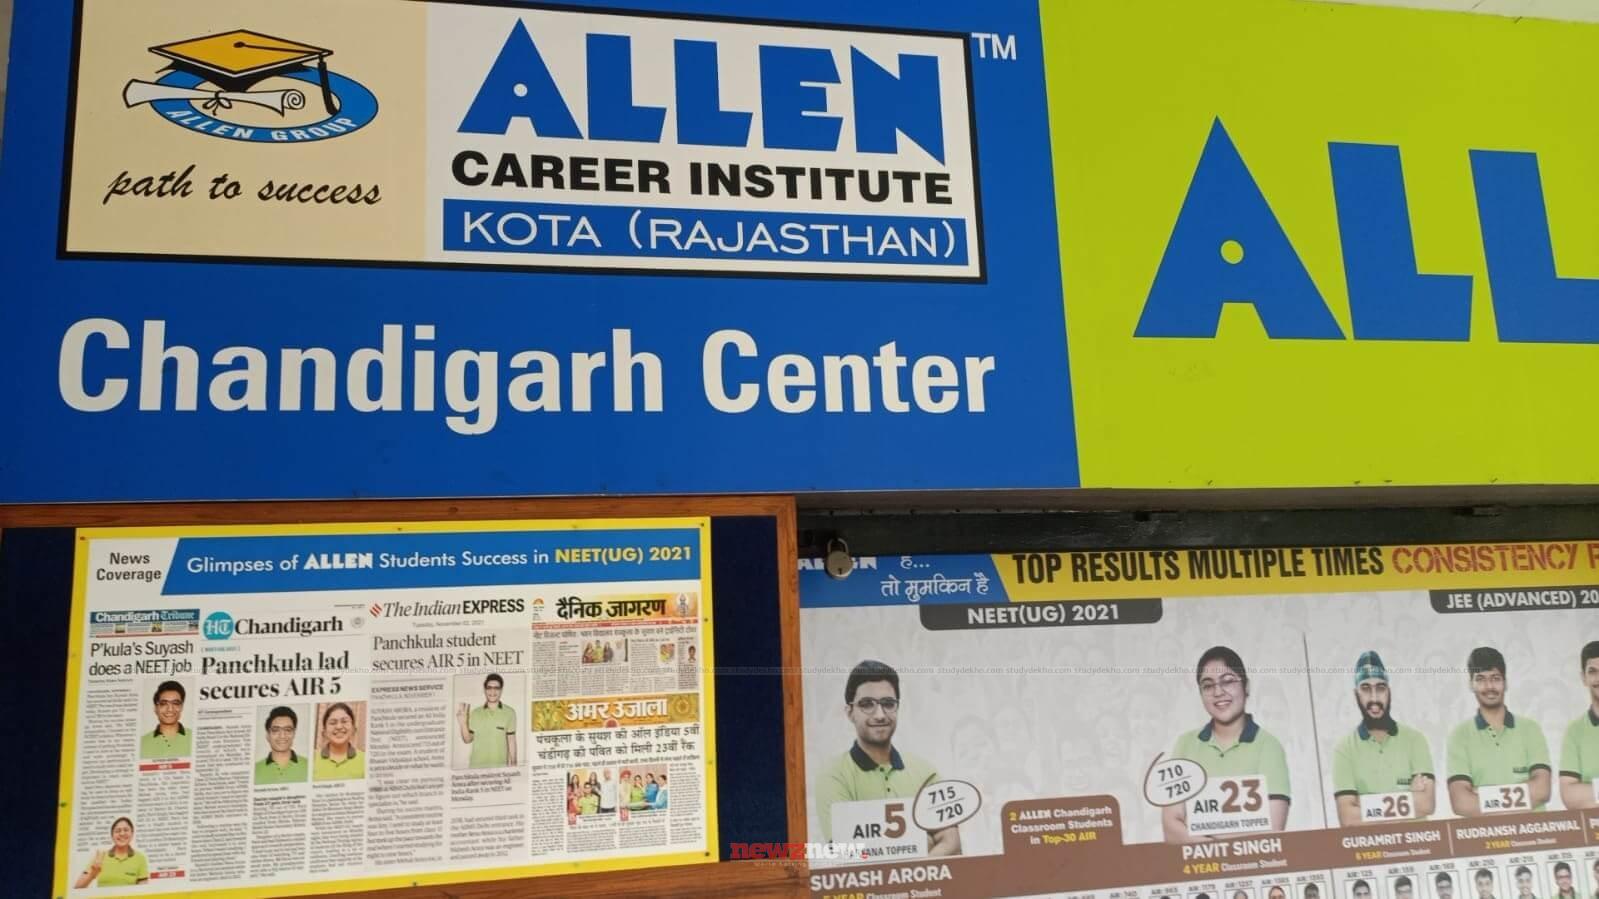 4 Students of Allen Chandigarh secured under 200 AIR in NEET (UG) 2022